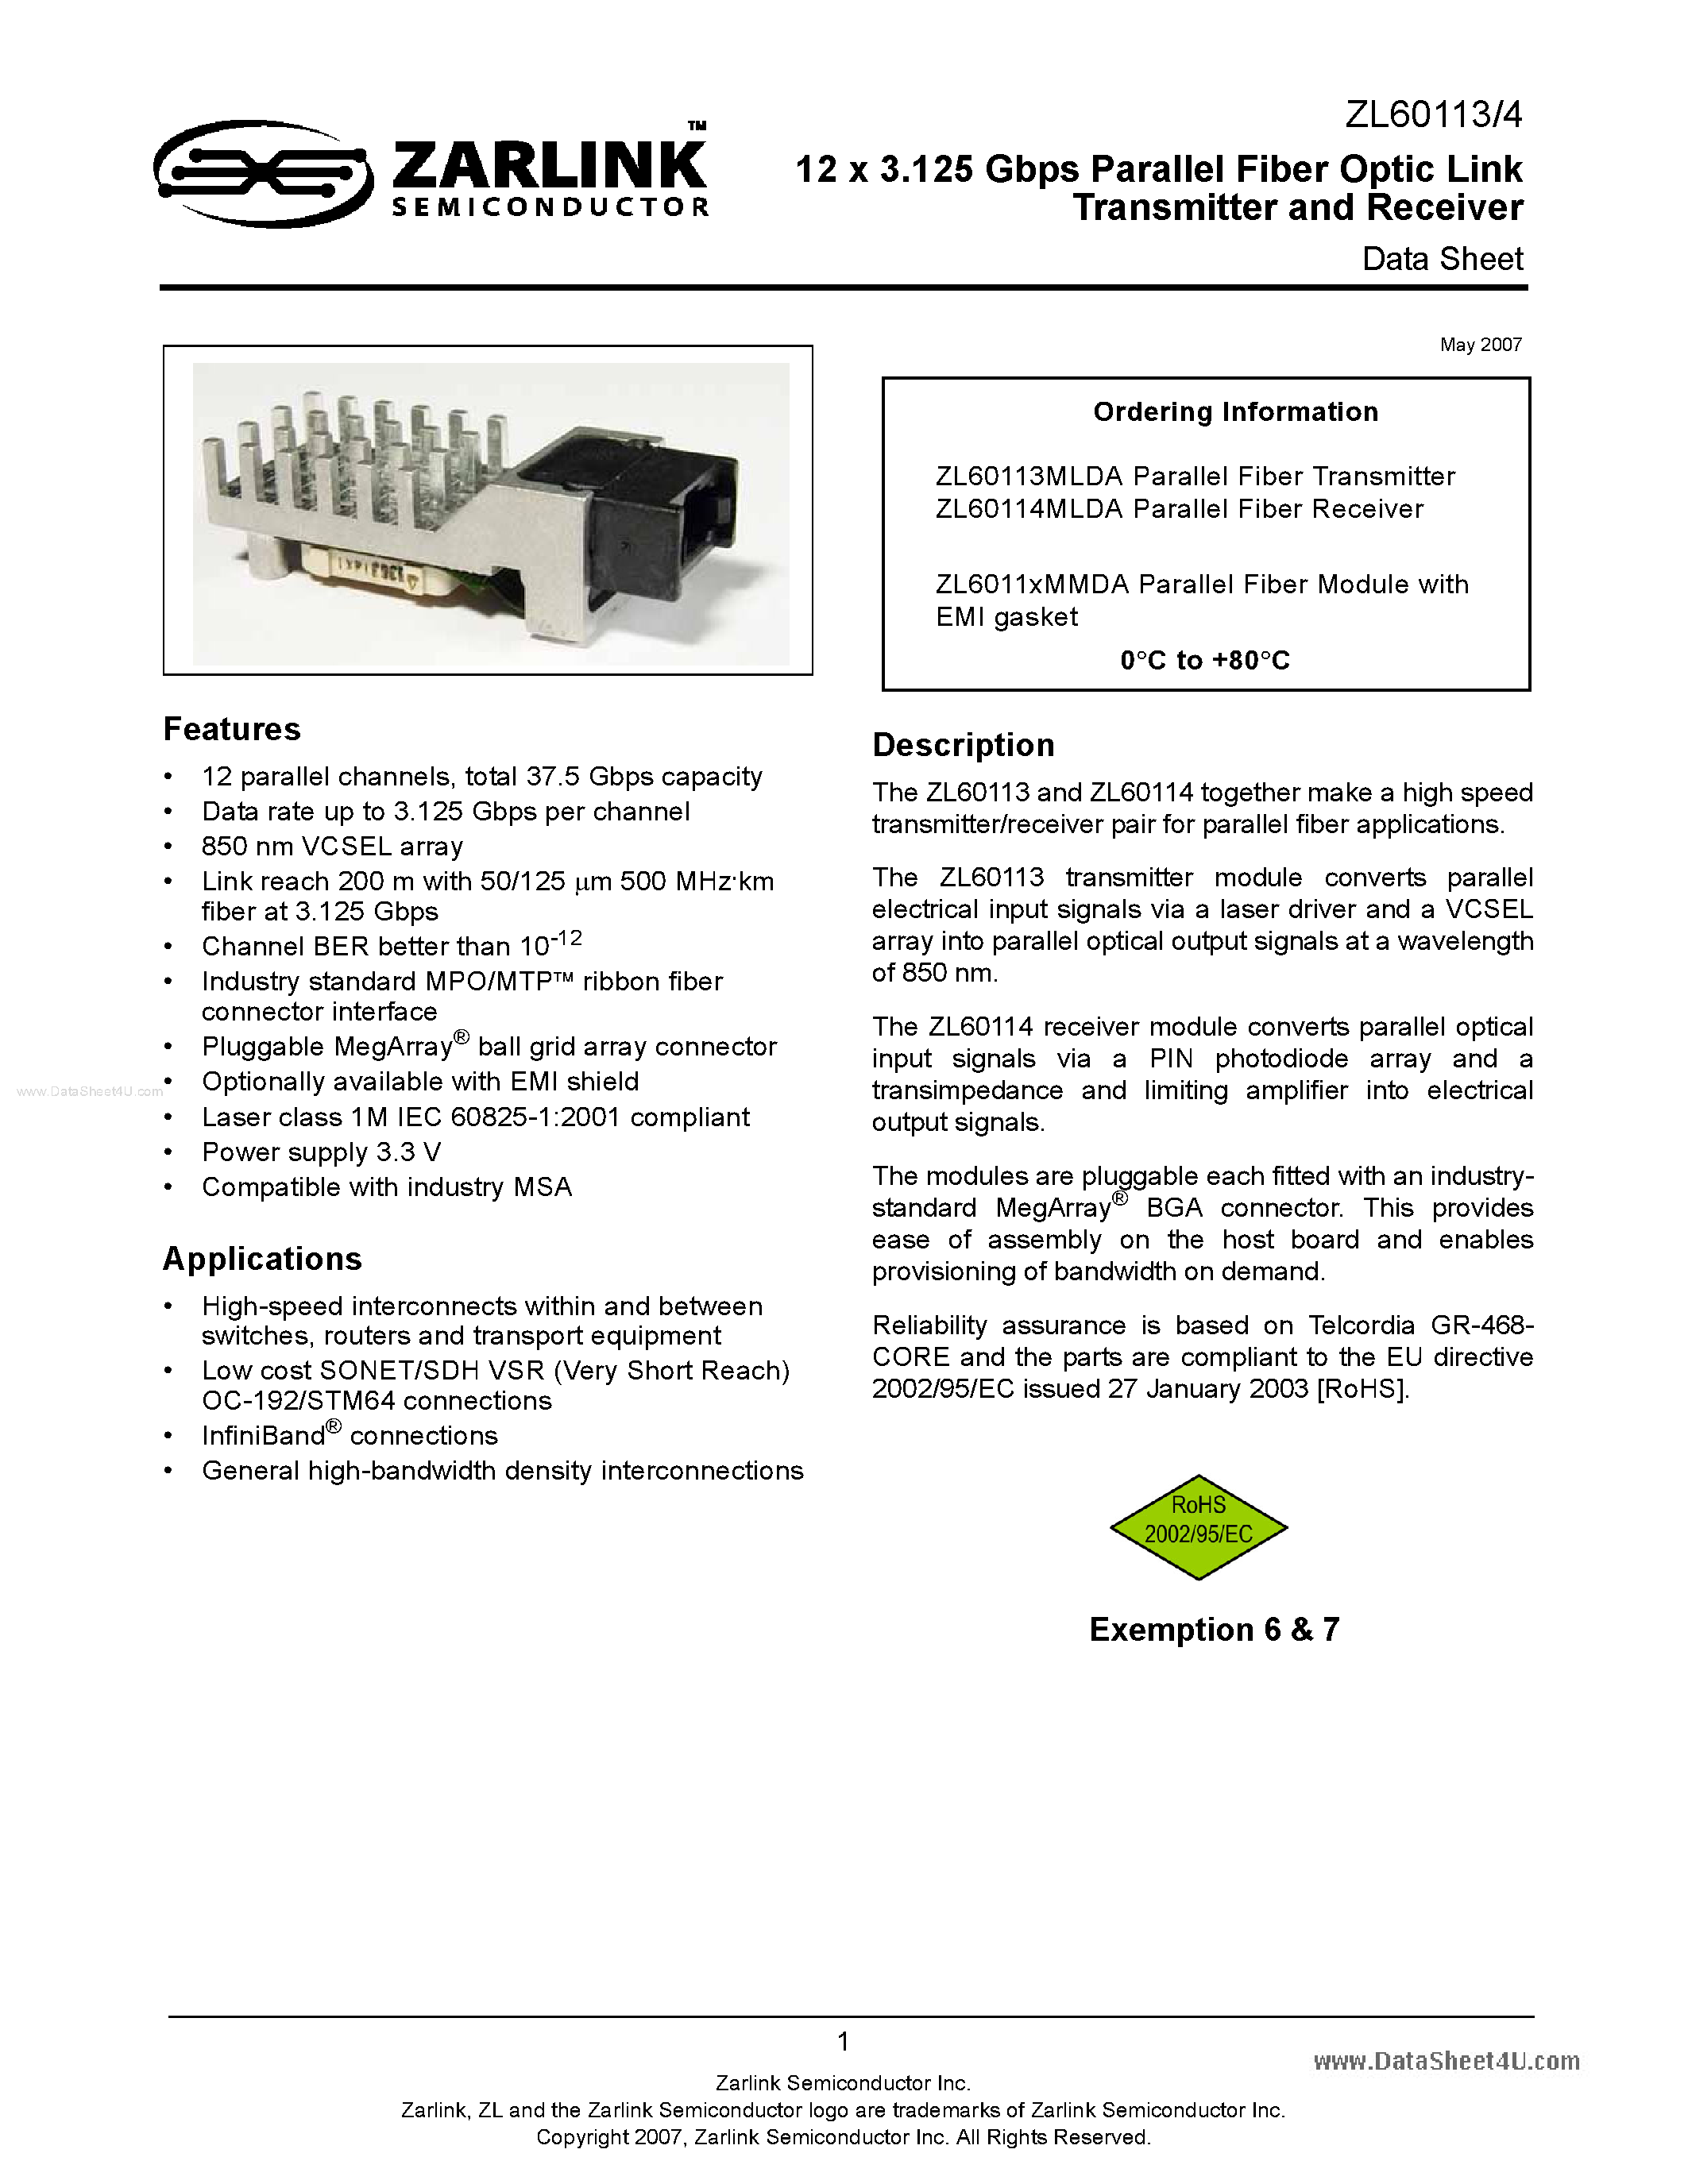 Datasheet ZL60113 - (ZL60113 / ZL60114) 12 x 3.125 Gbps Parallel Fiber Optic Link Transmitter page 1